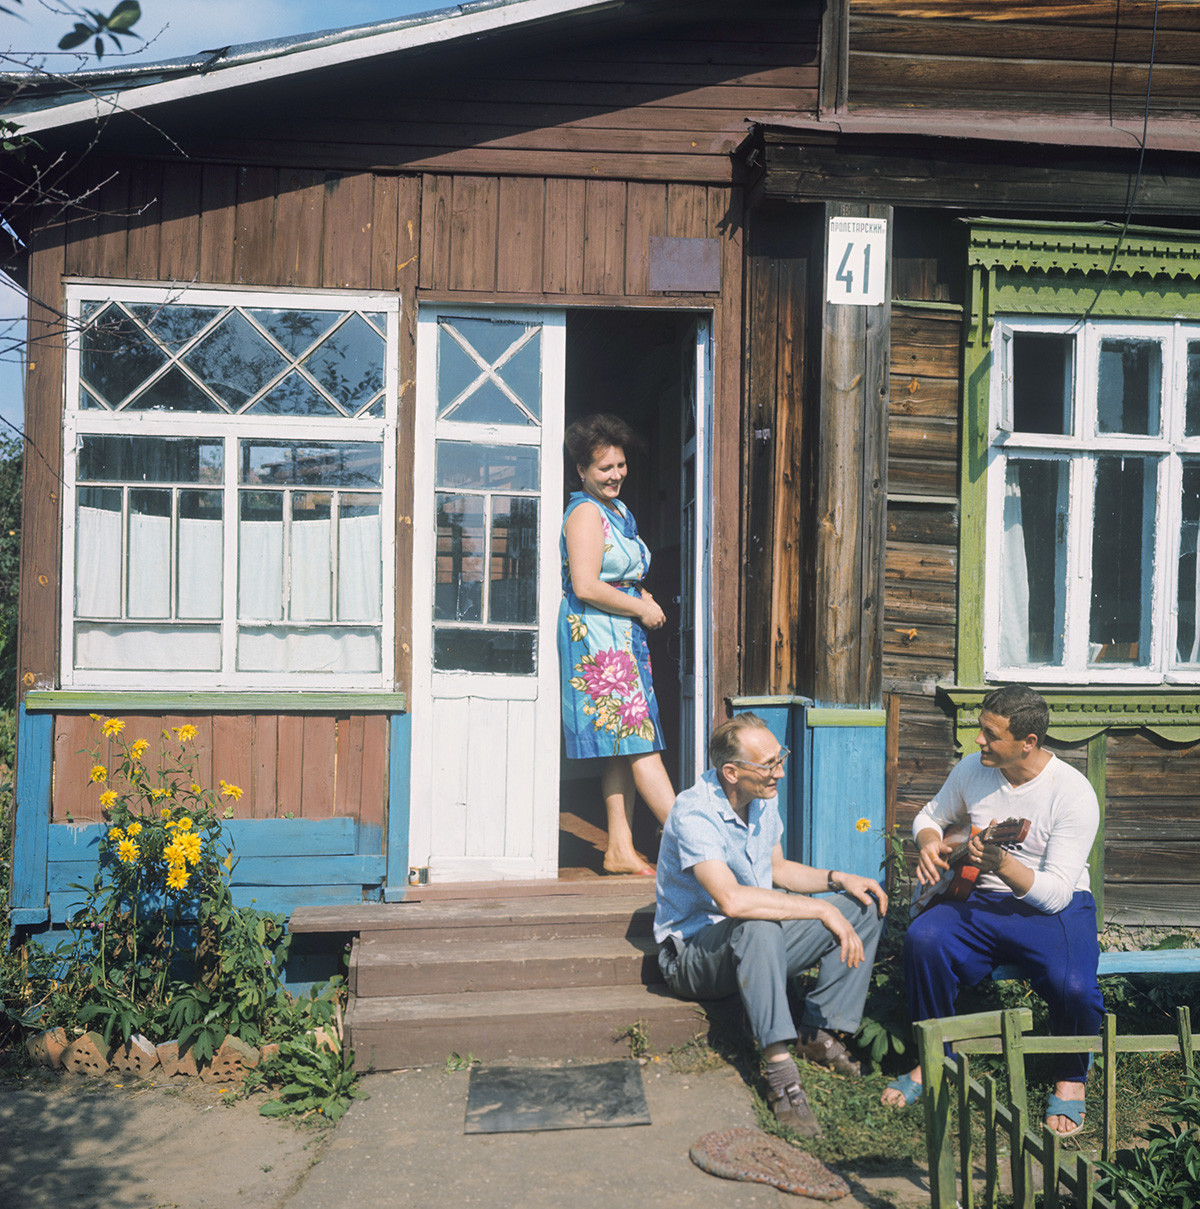 Soviet cosmonaut Vladislav Volkov at the dacha, with his family